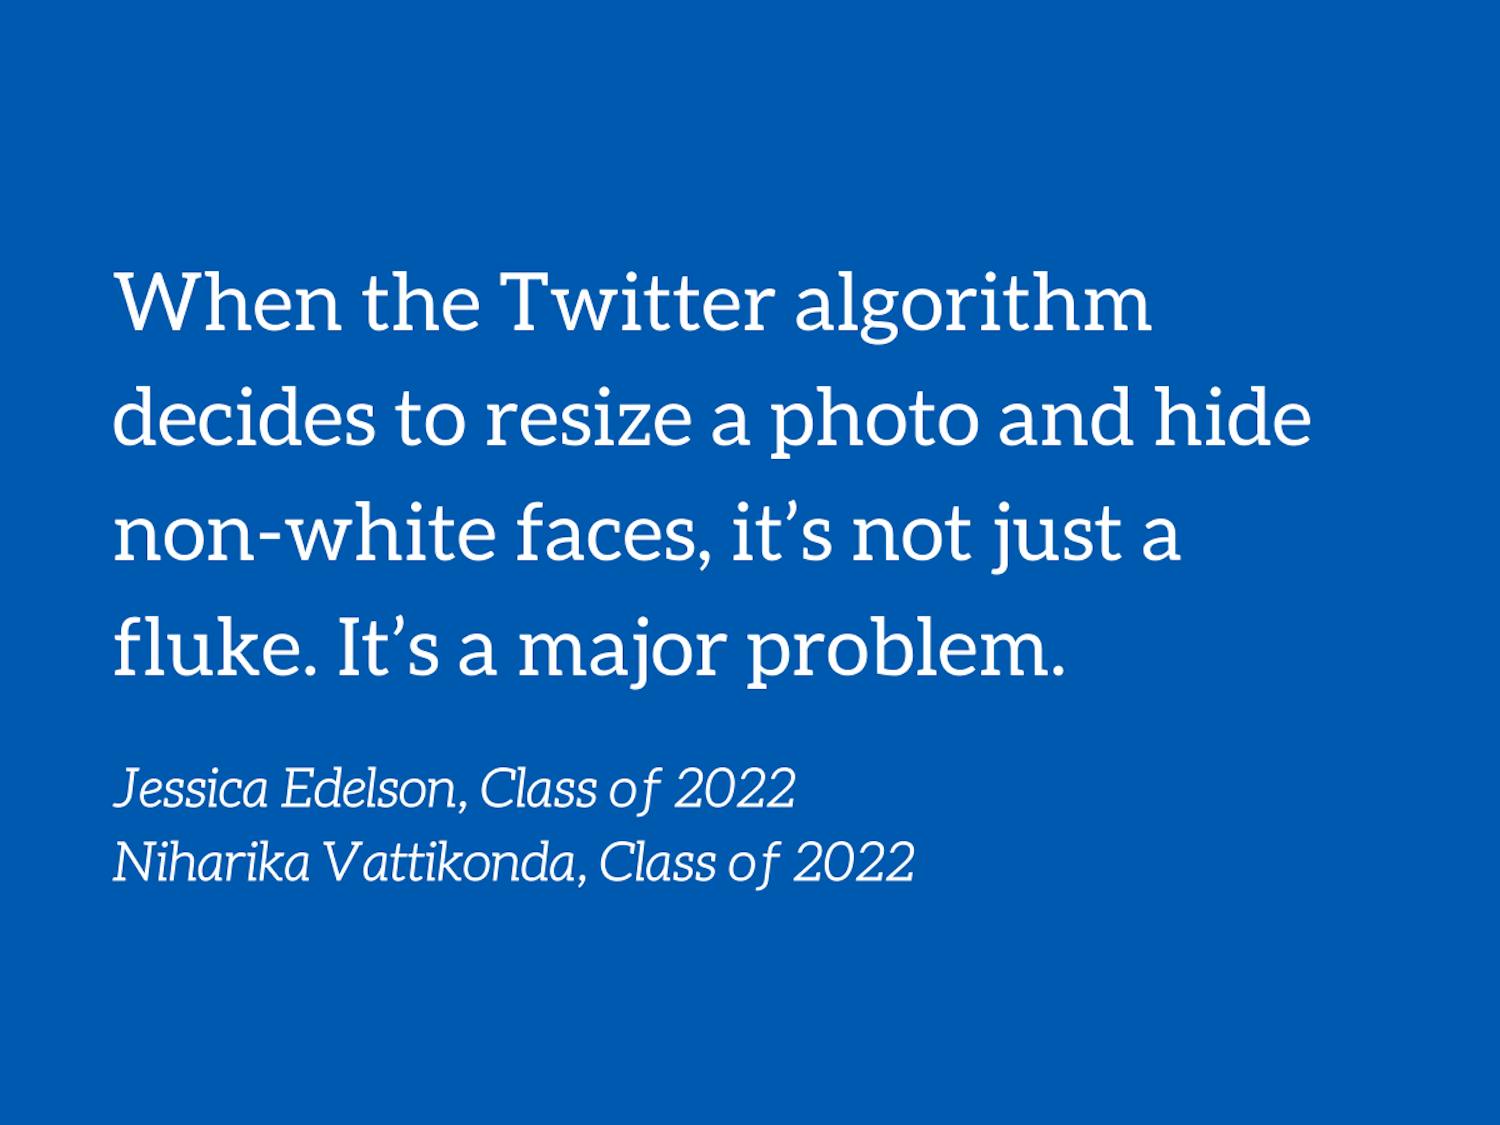 201001-vattikonda-edelson-facial-recognition-twitter.png